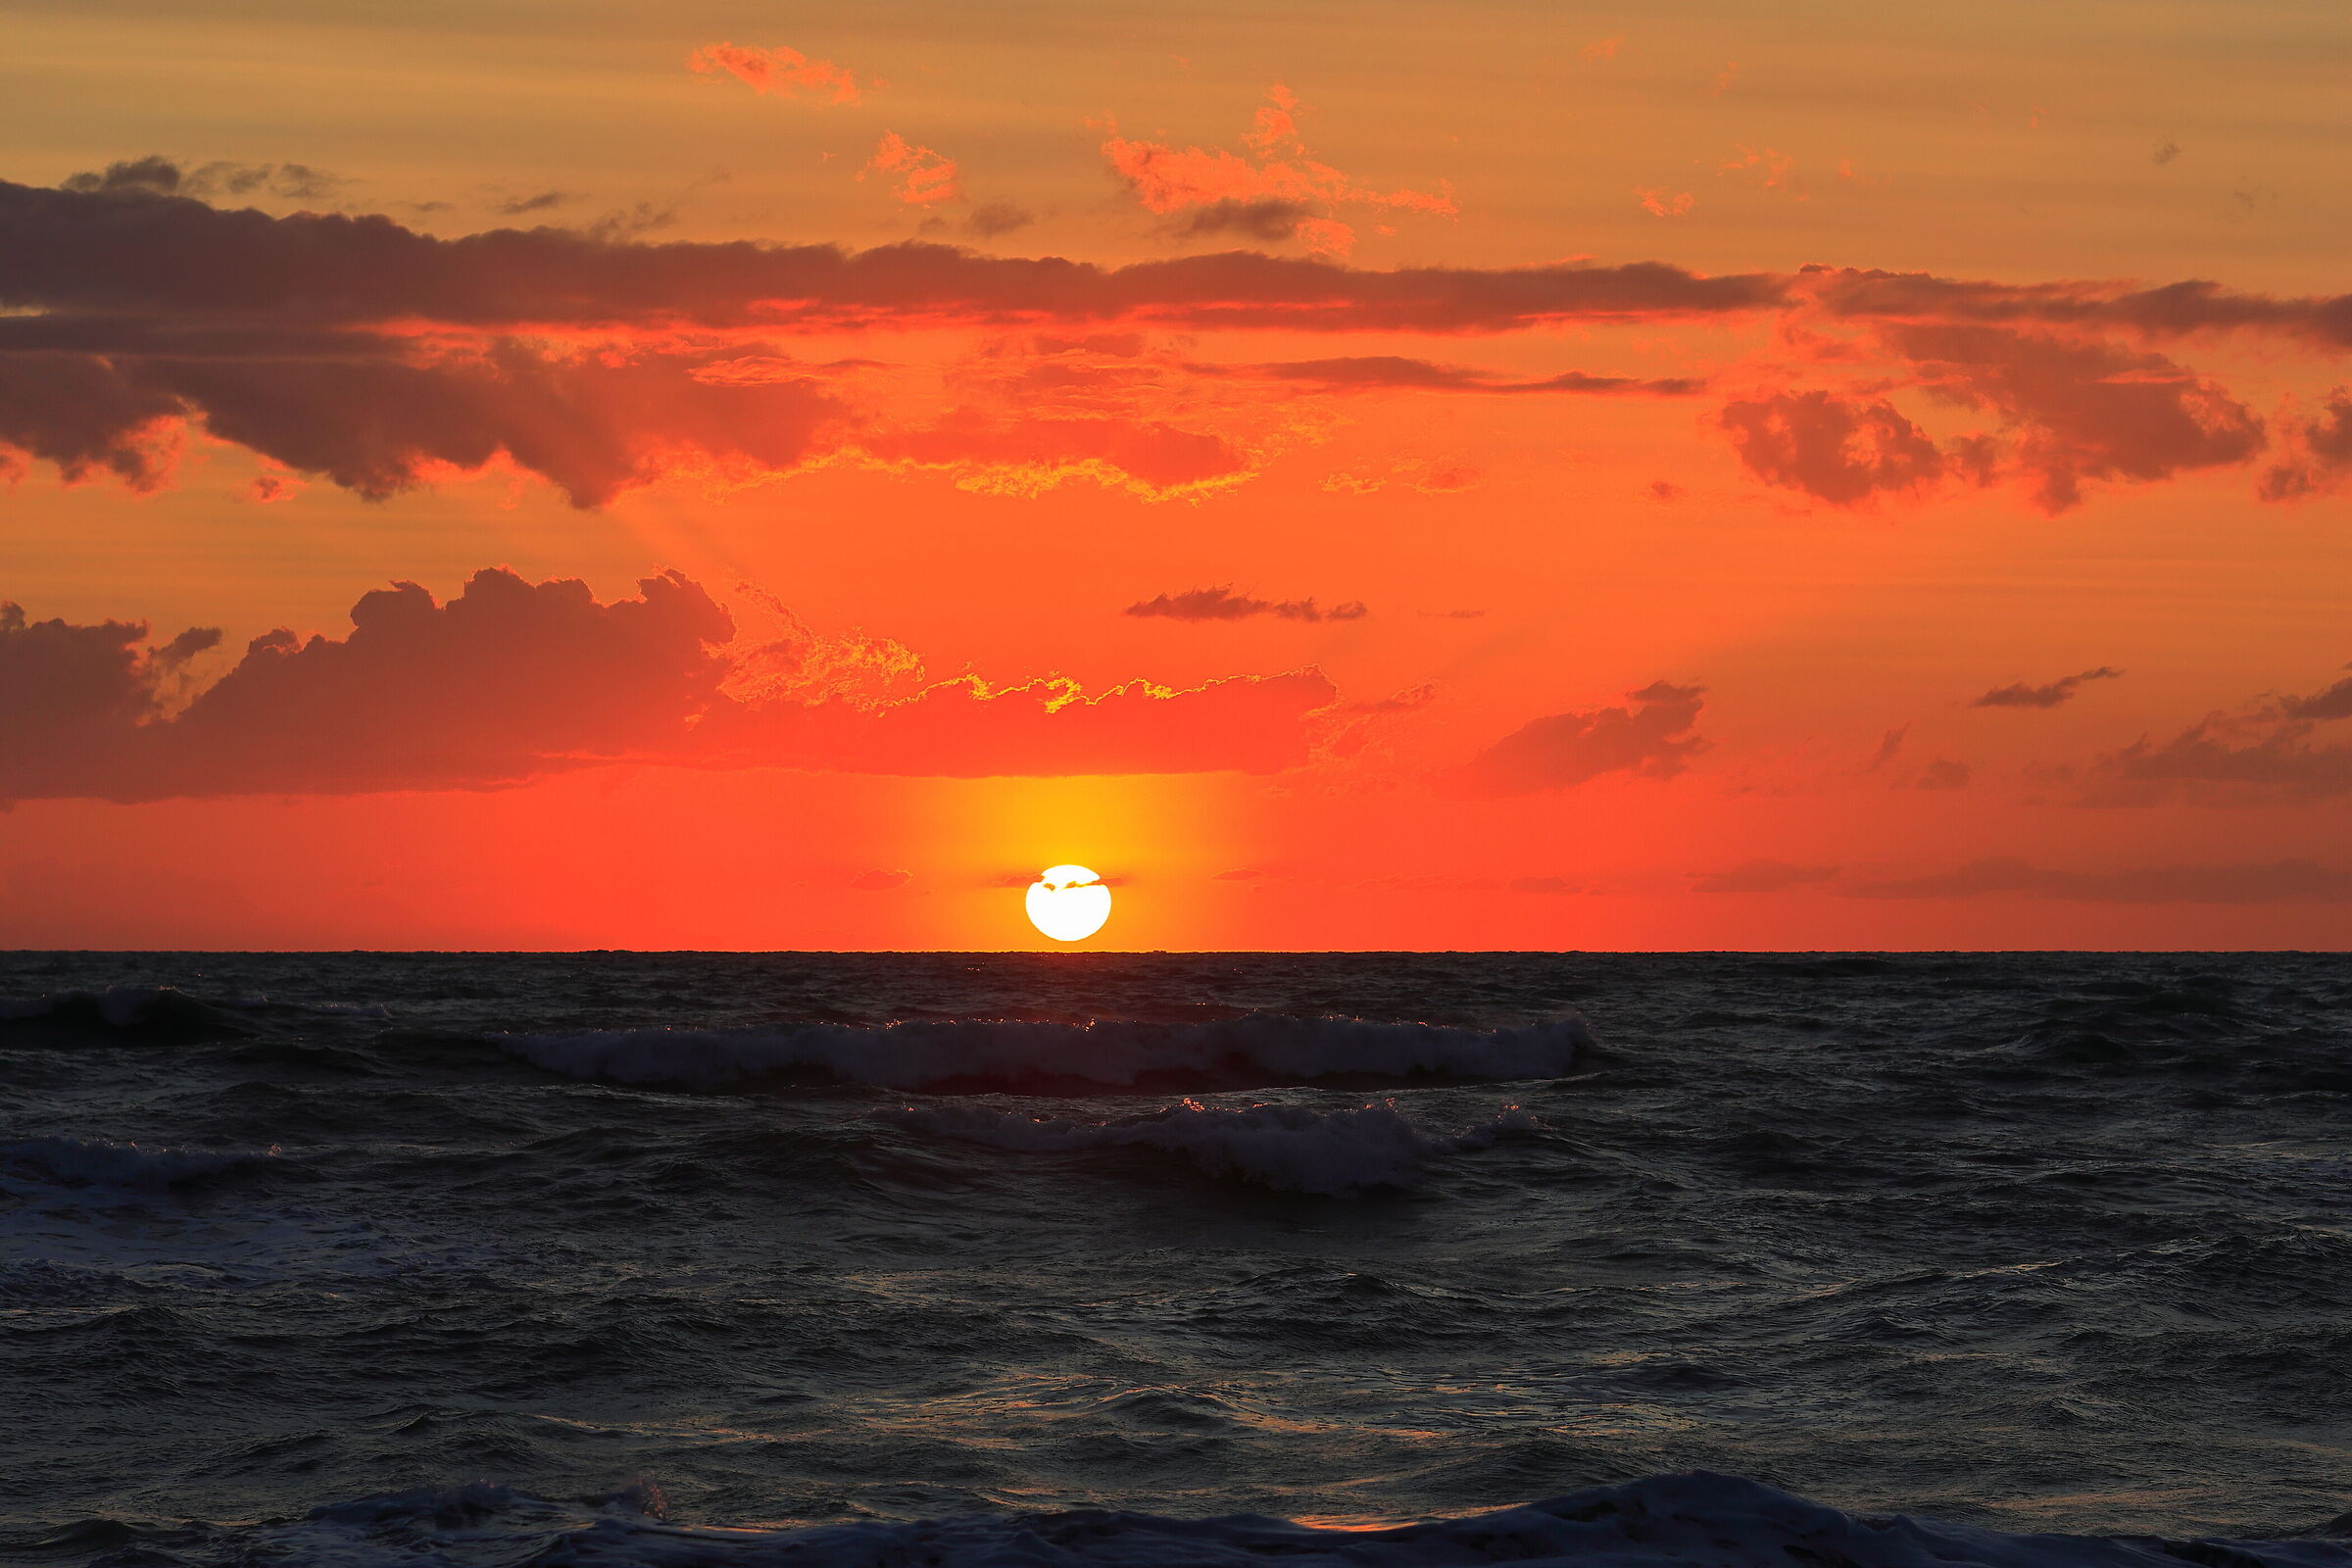 Sunset over rough seas...